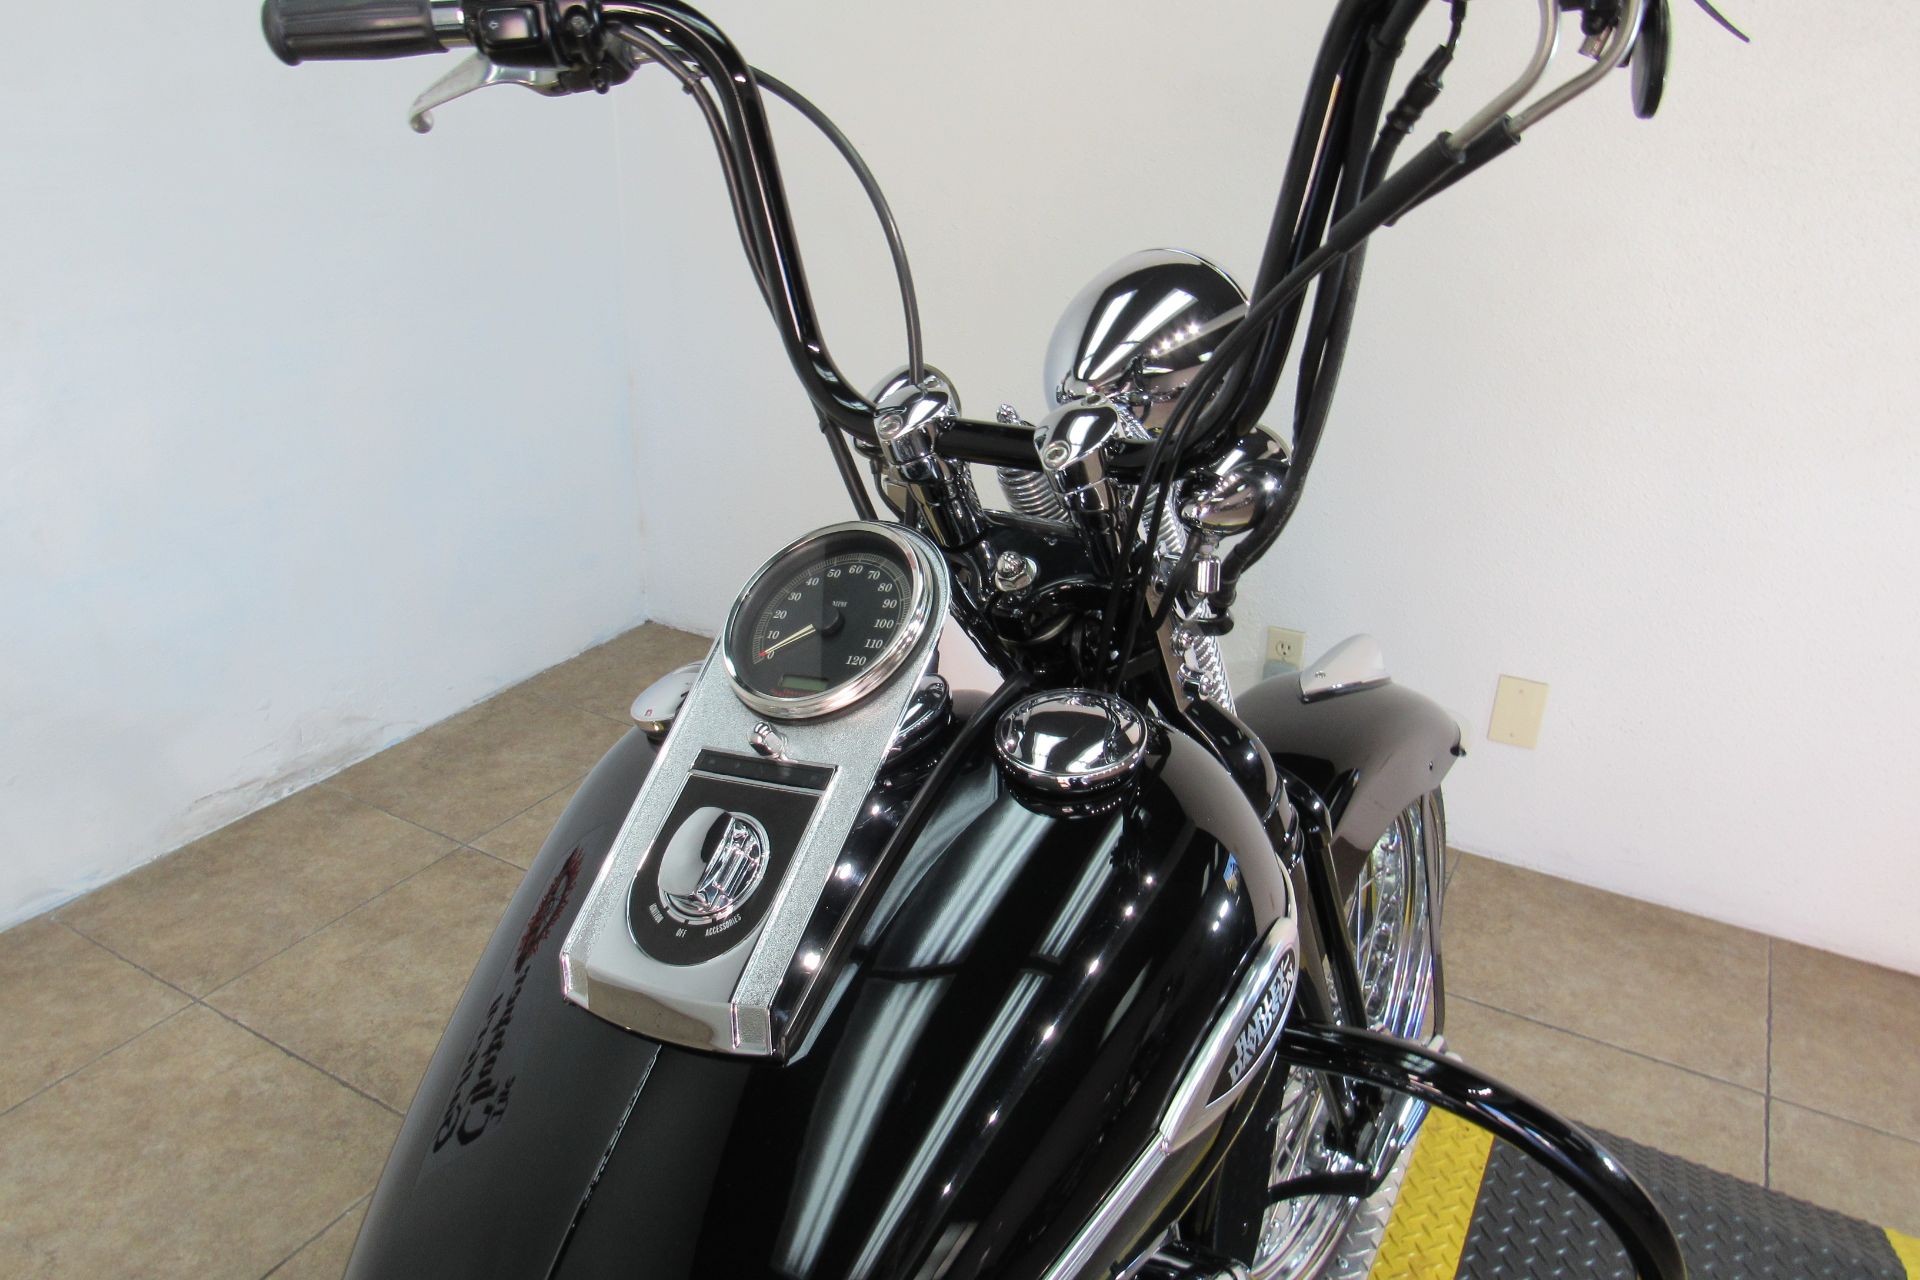 2005 Harley-Davidson FLSTSC/FLSTSCI Softail® Springer® Classic in Temecula, California - Photo 30